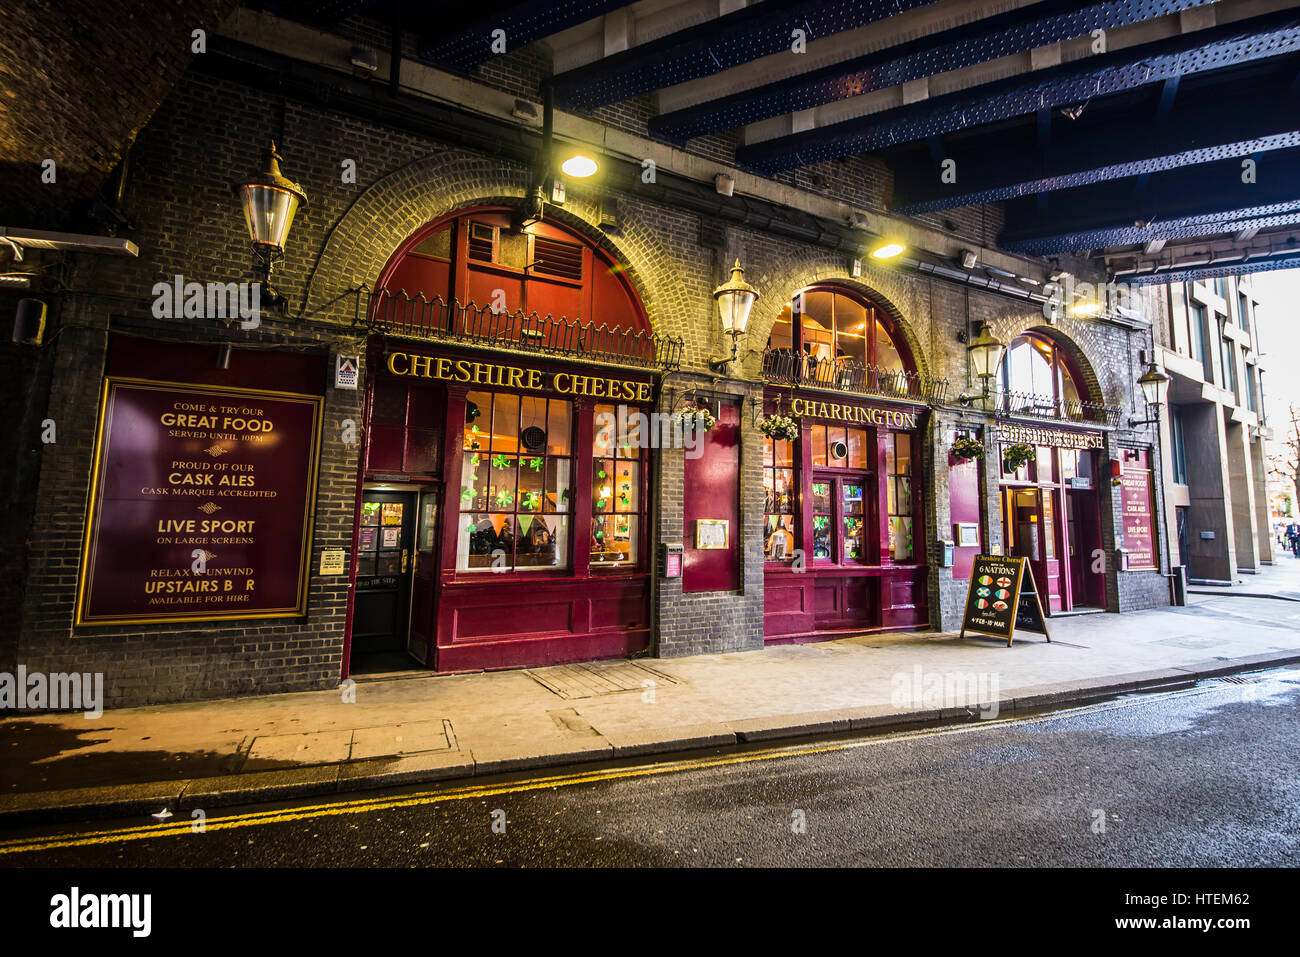 Cheshire Cheese pub underneath the Fenchurch Street c2c railway line, London, UK Stock Photo